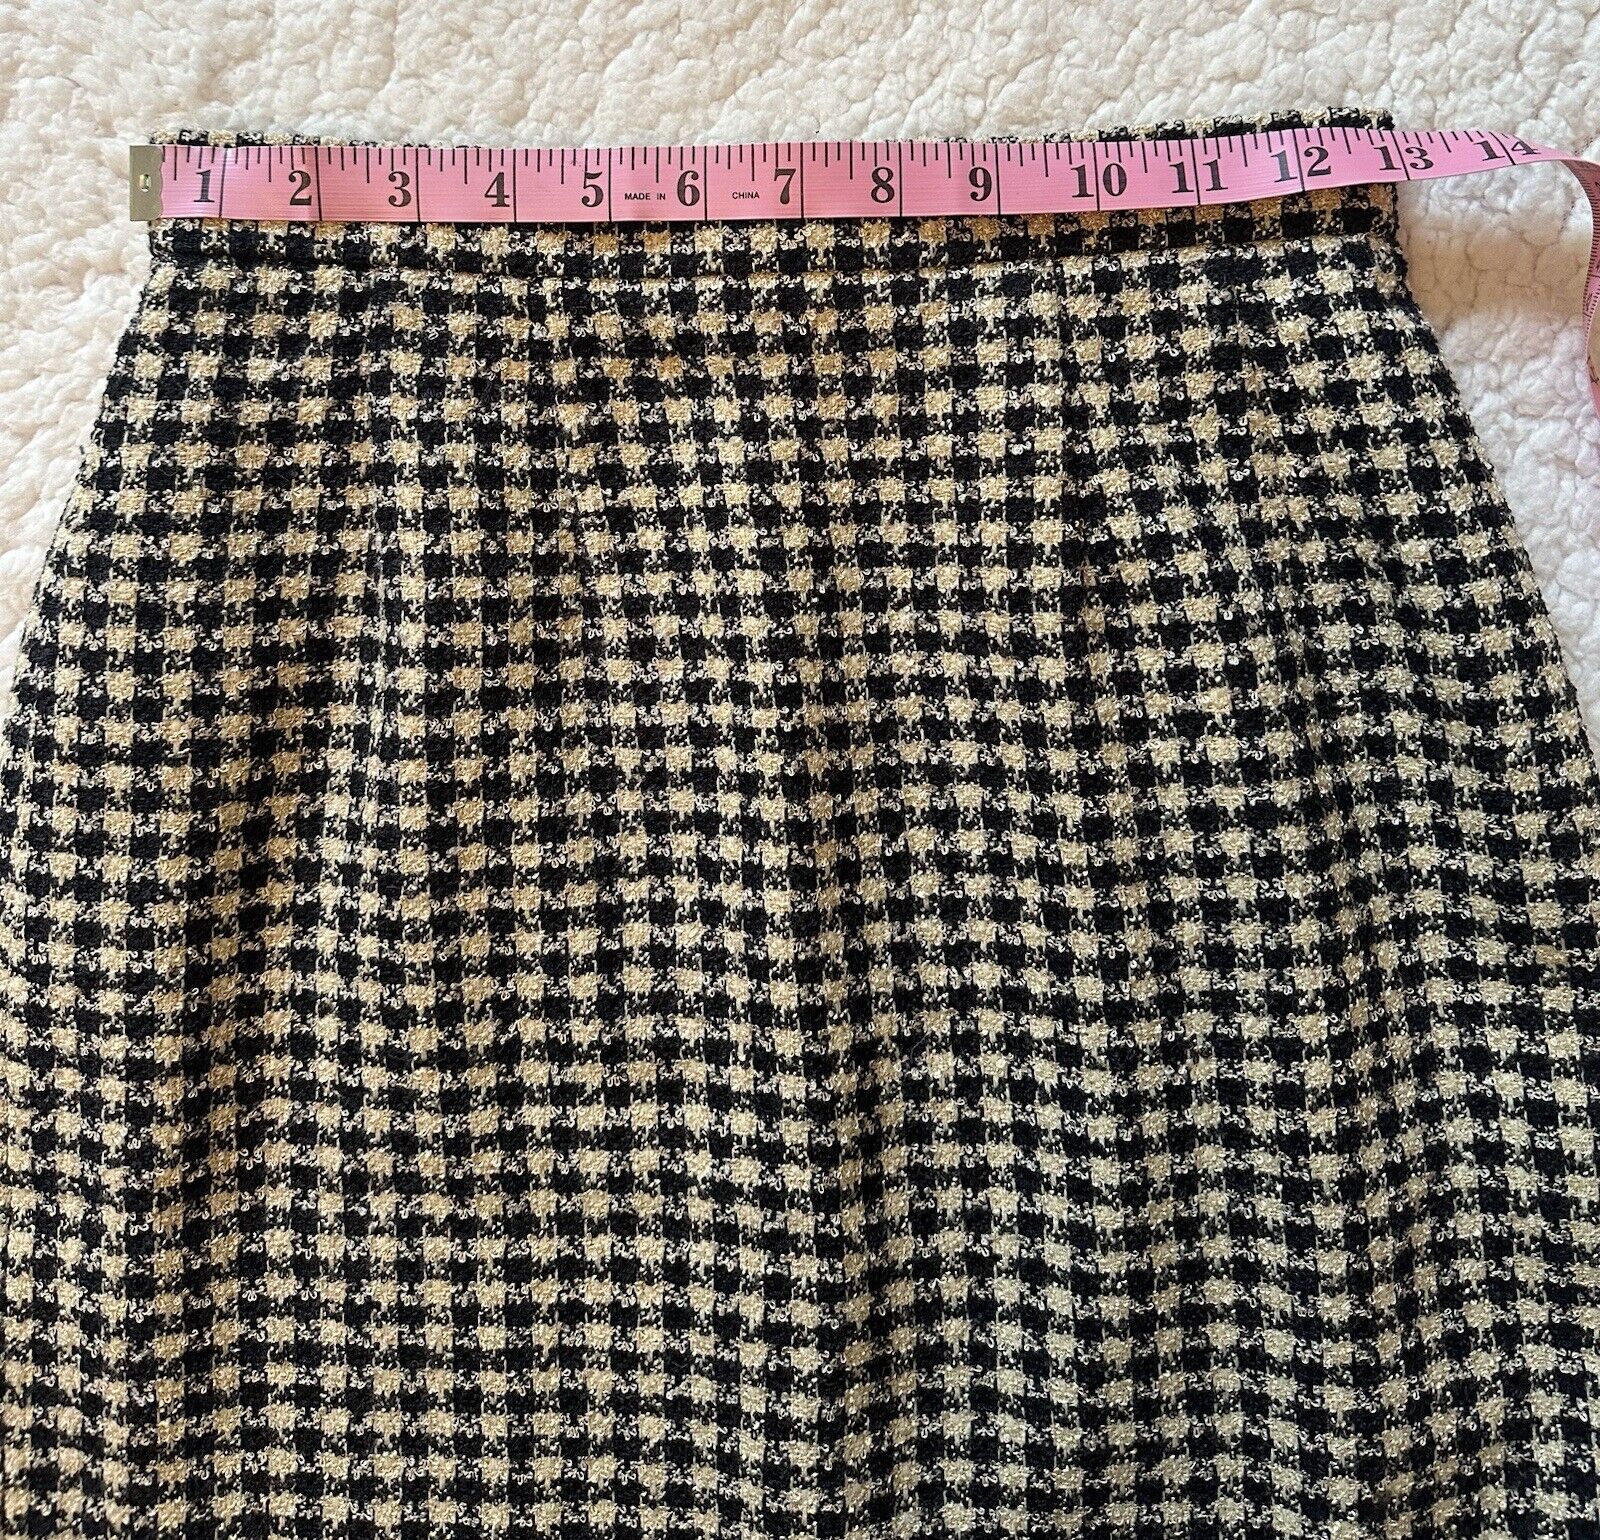 VTG Carlisle Pencil Skirt Wool Blend Textured Bla… - image 5